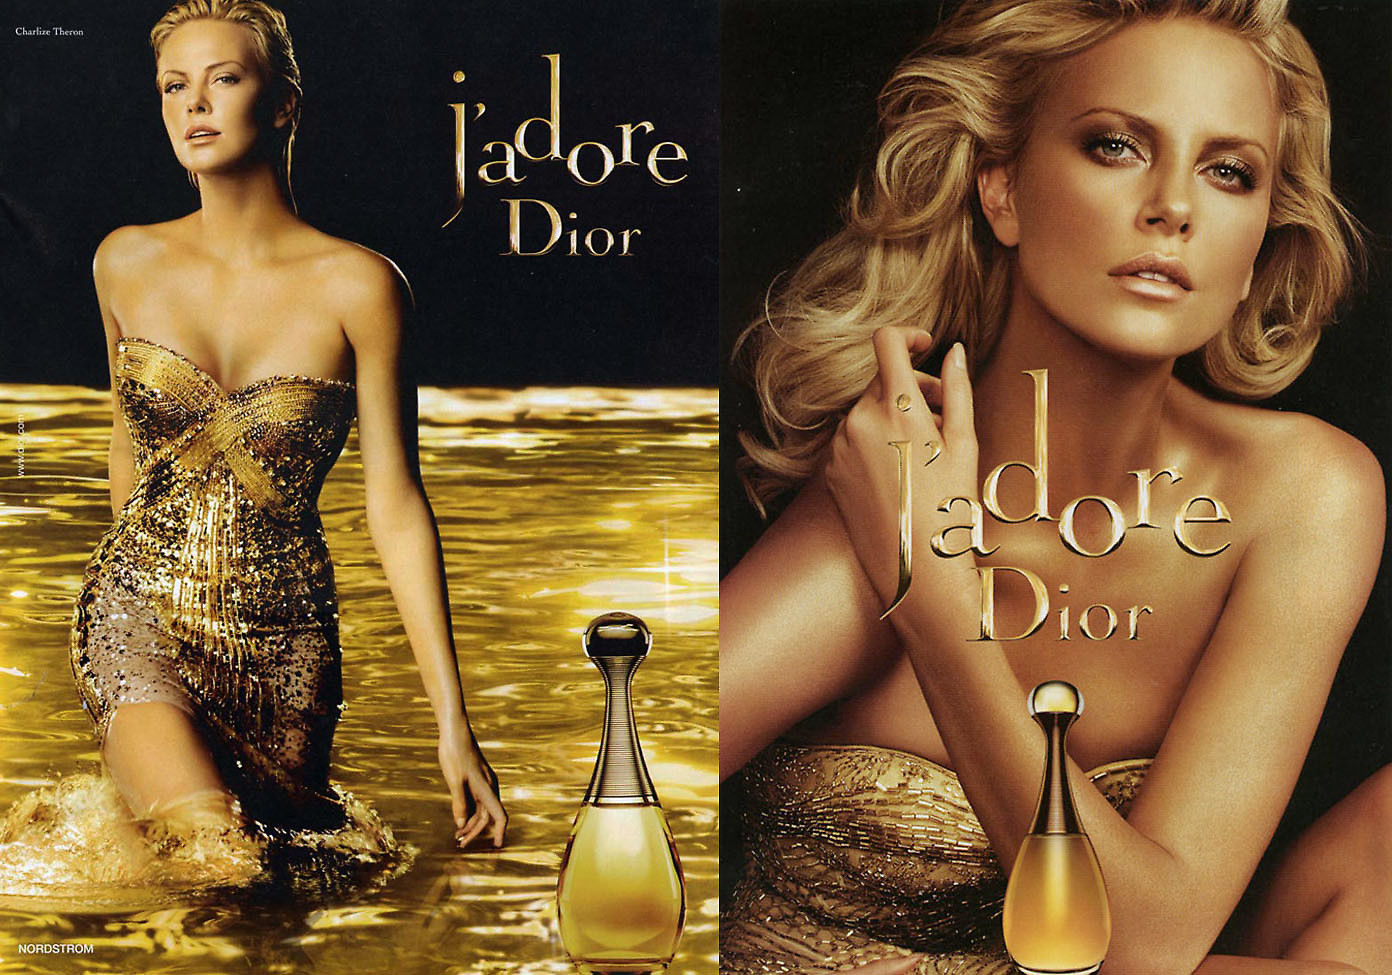 Jadore Dior Charlize double 2.jpg 1510 975 0 90 1 50 50